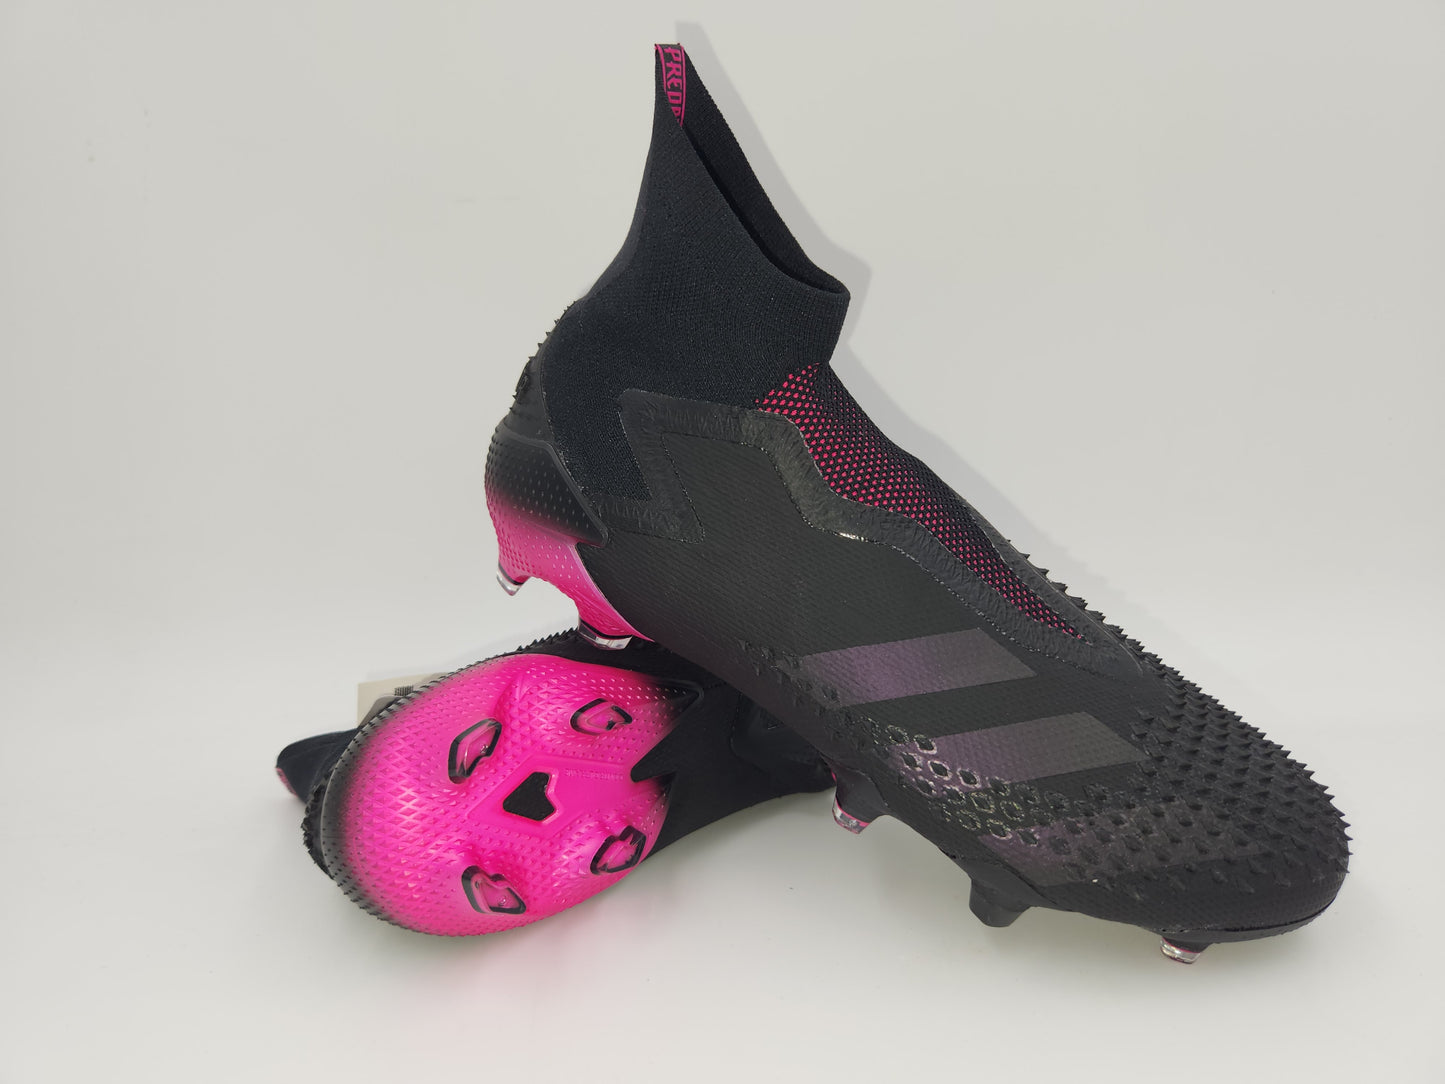 Adidas Predator Mutator 20+ FG Black Pink